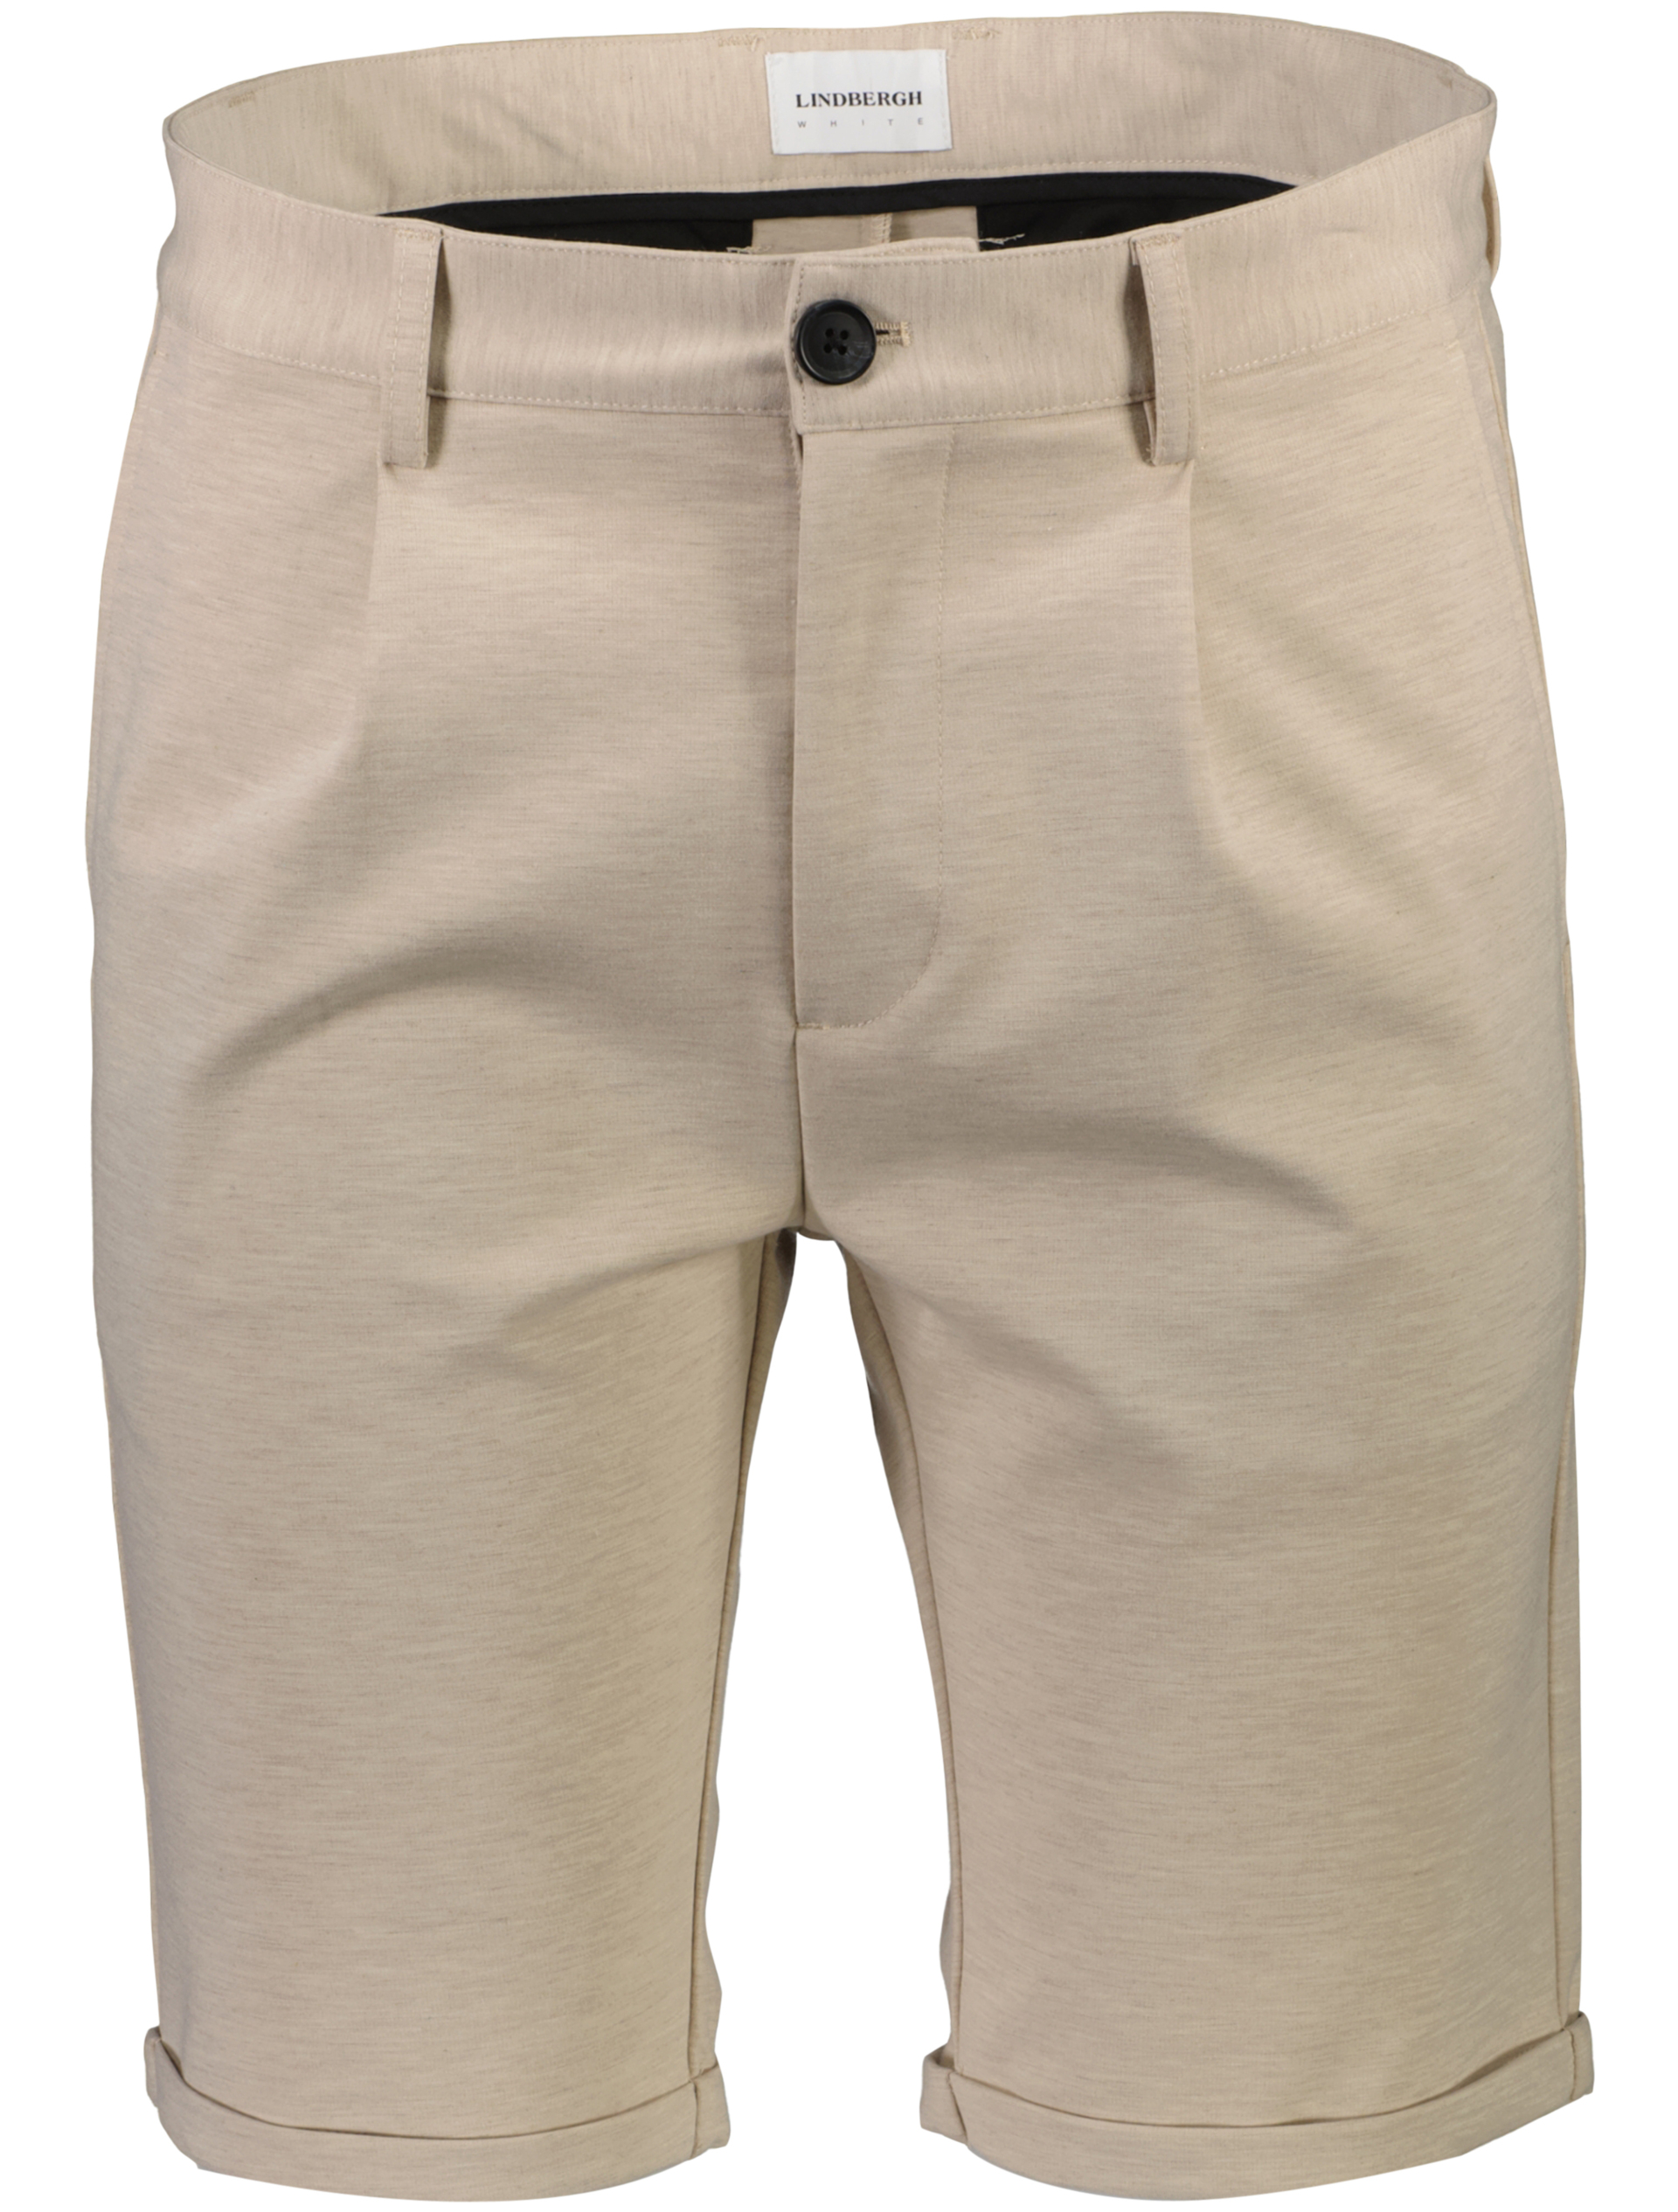 Lindbergh Pantalon korte broek grijs / stone mel